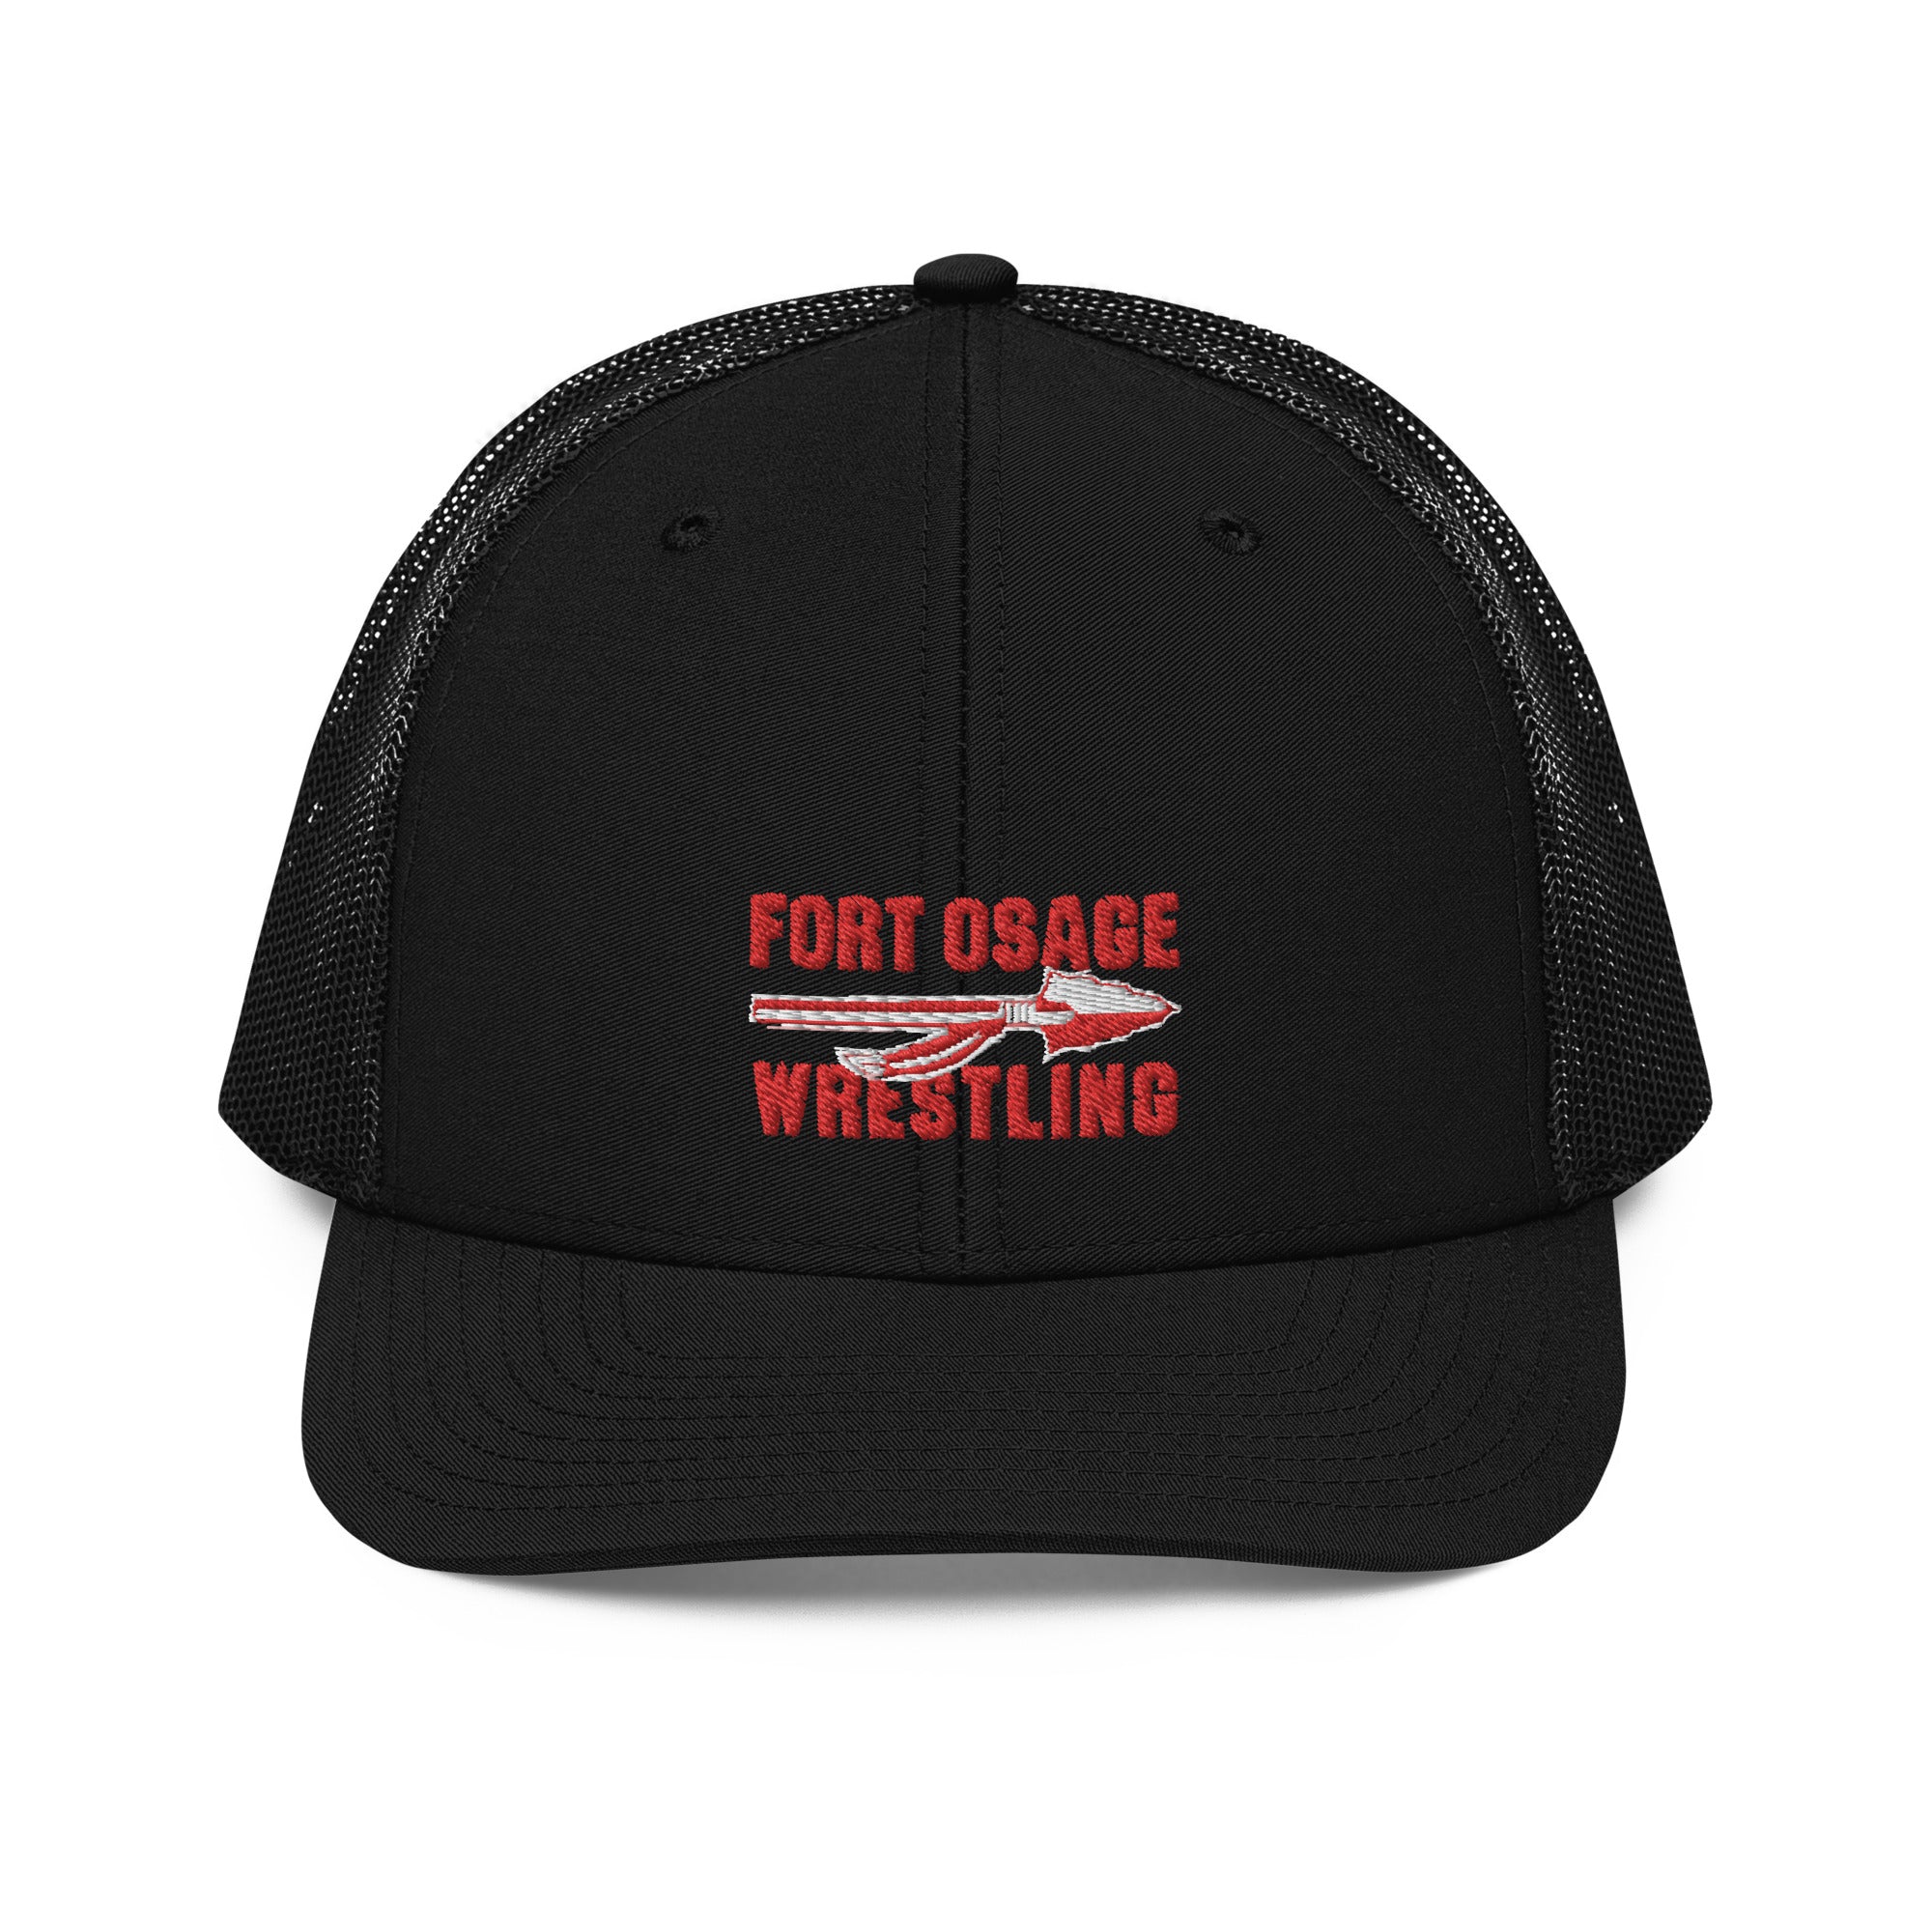 Fort Osage Wrestling Snapback Trucker Cap